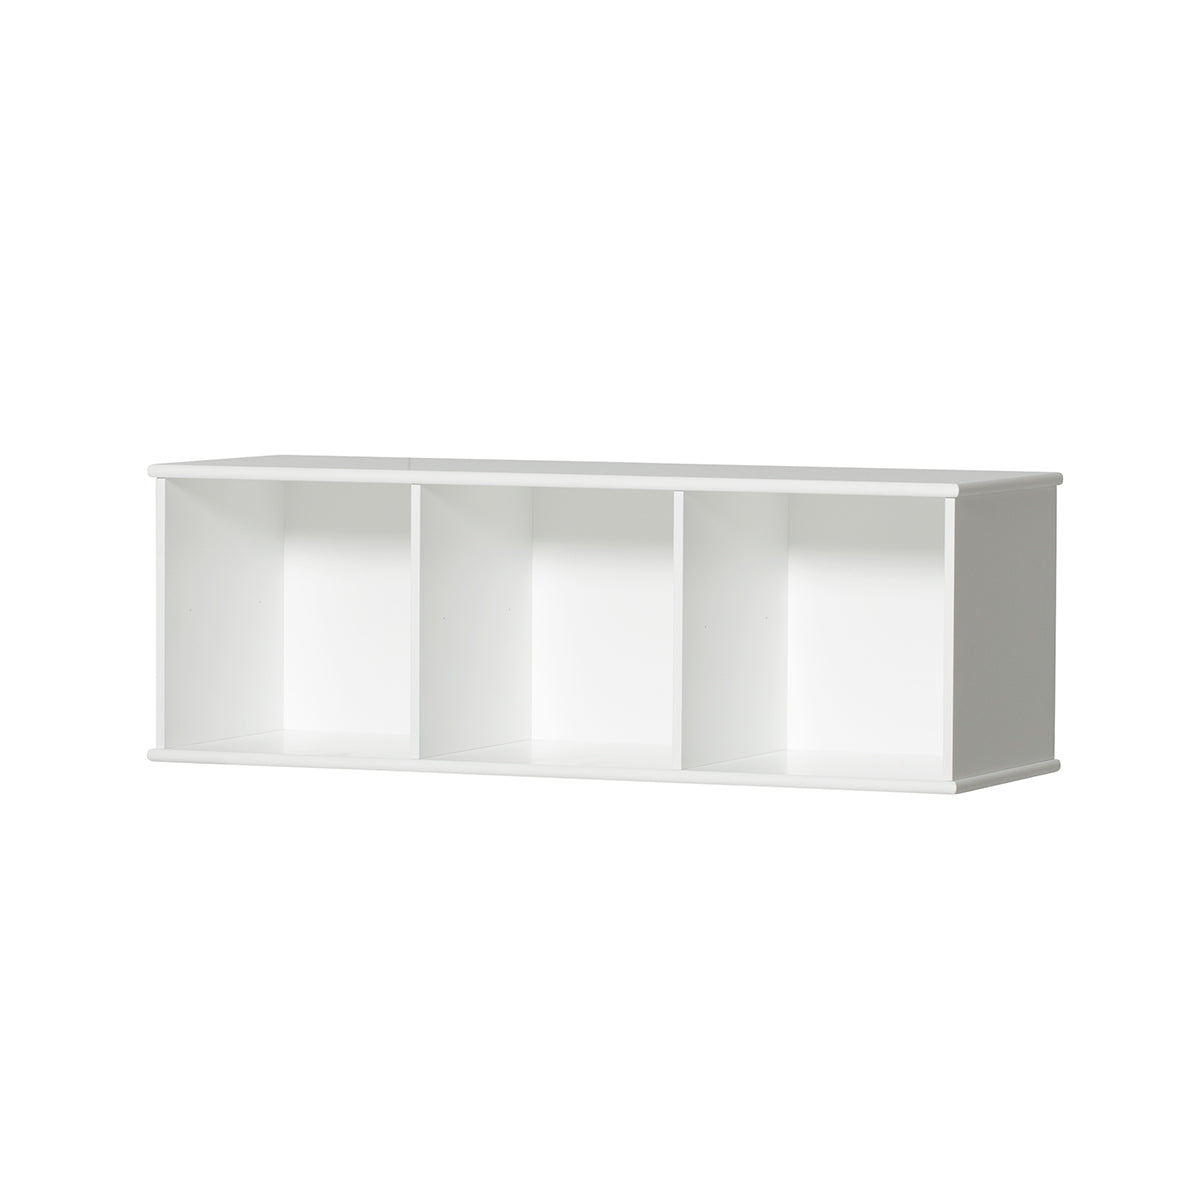 Oliver Furniture Wood Shelf 3 x 1 horizontal